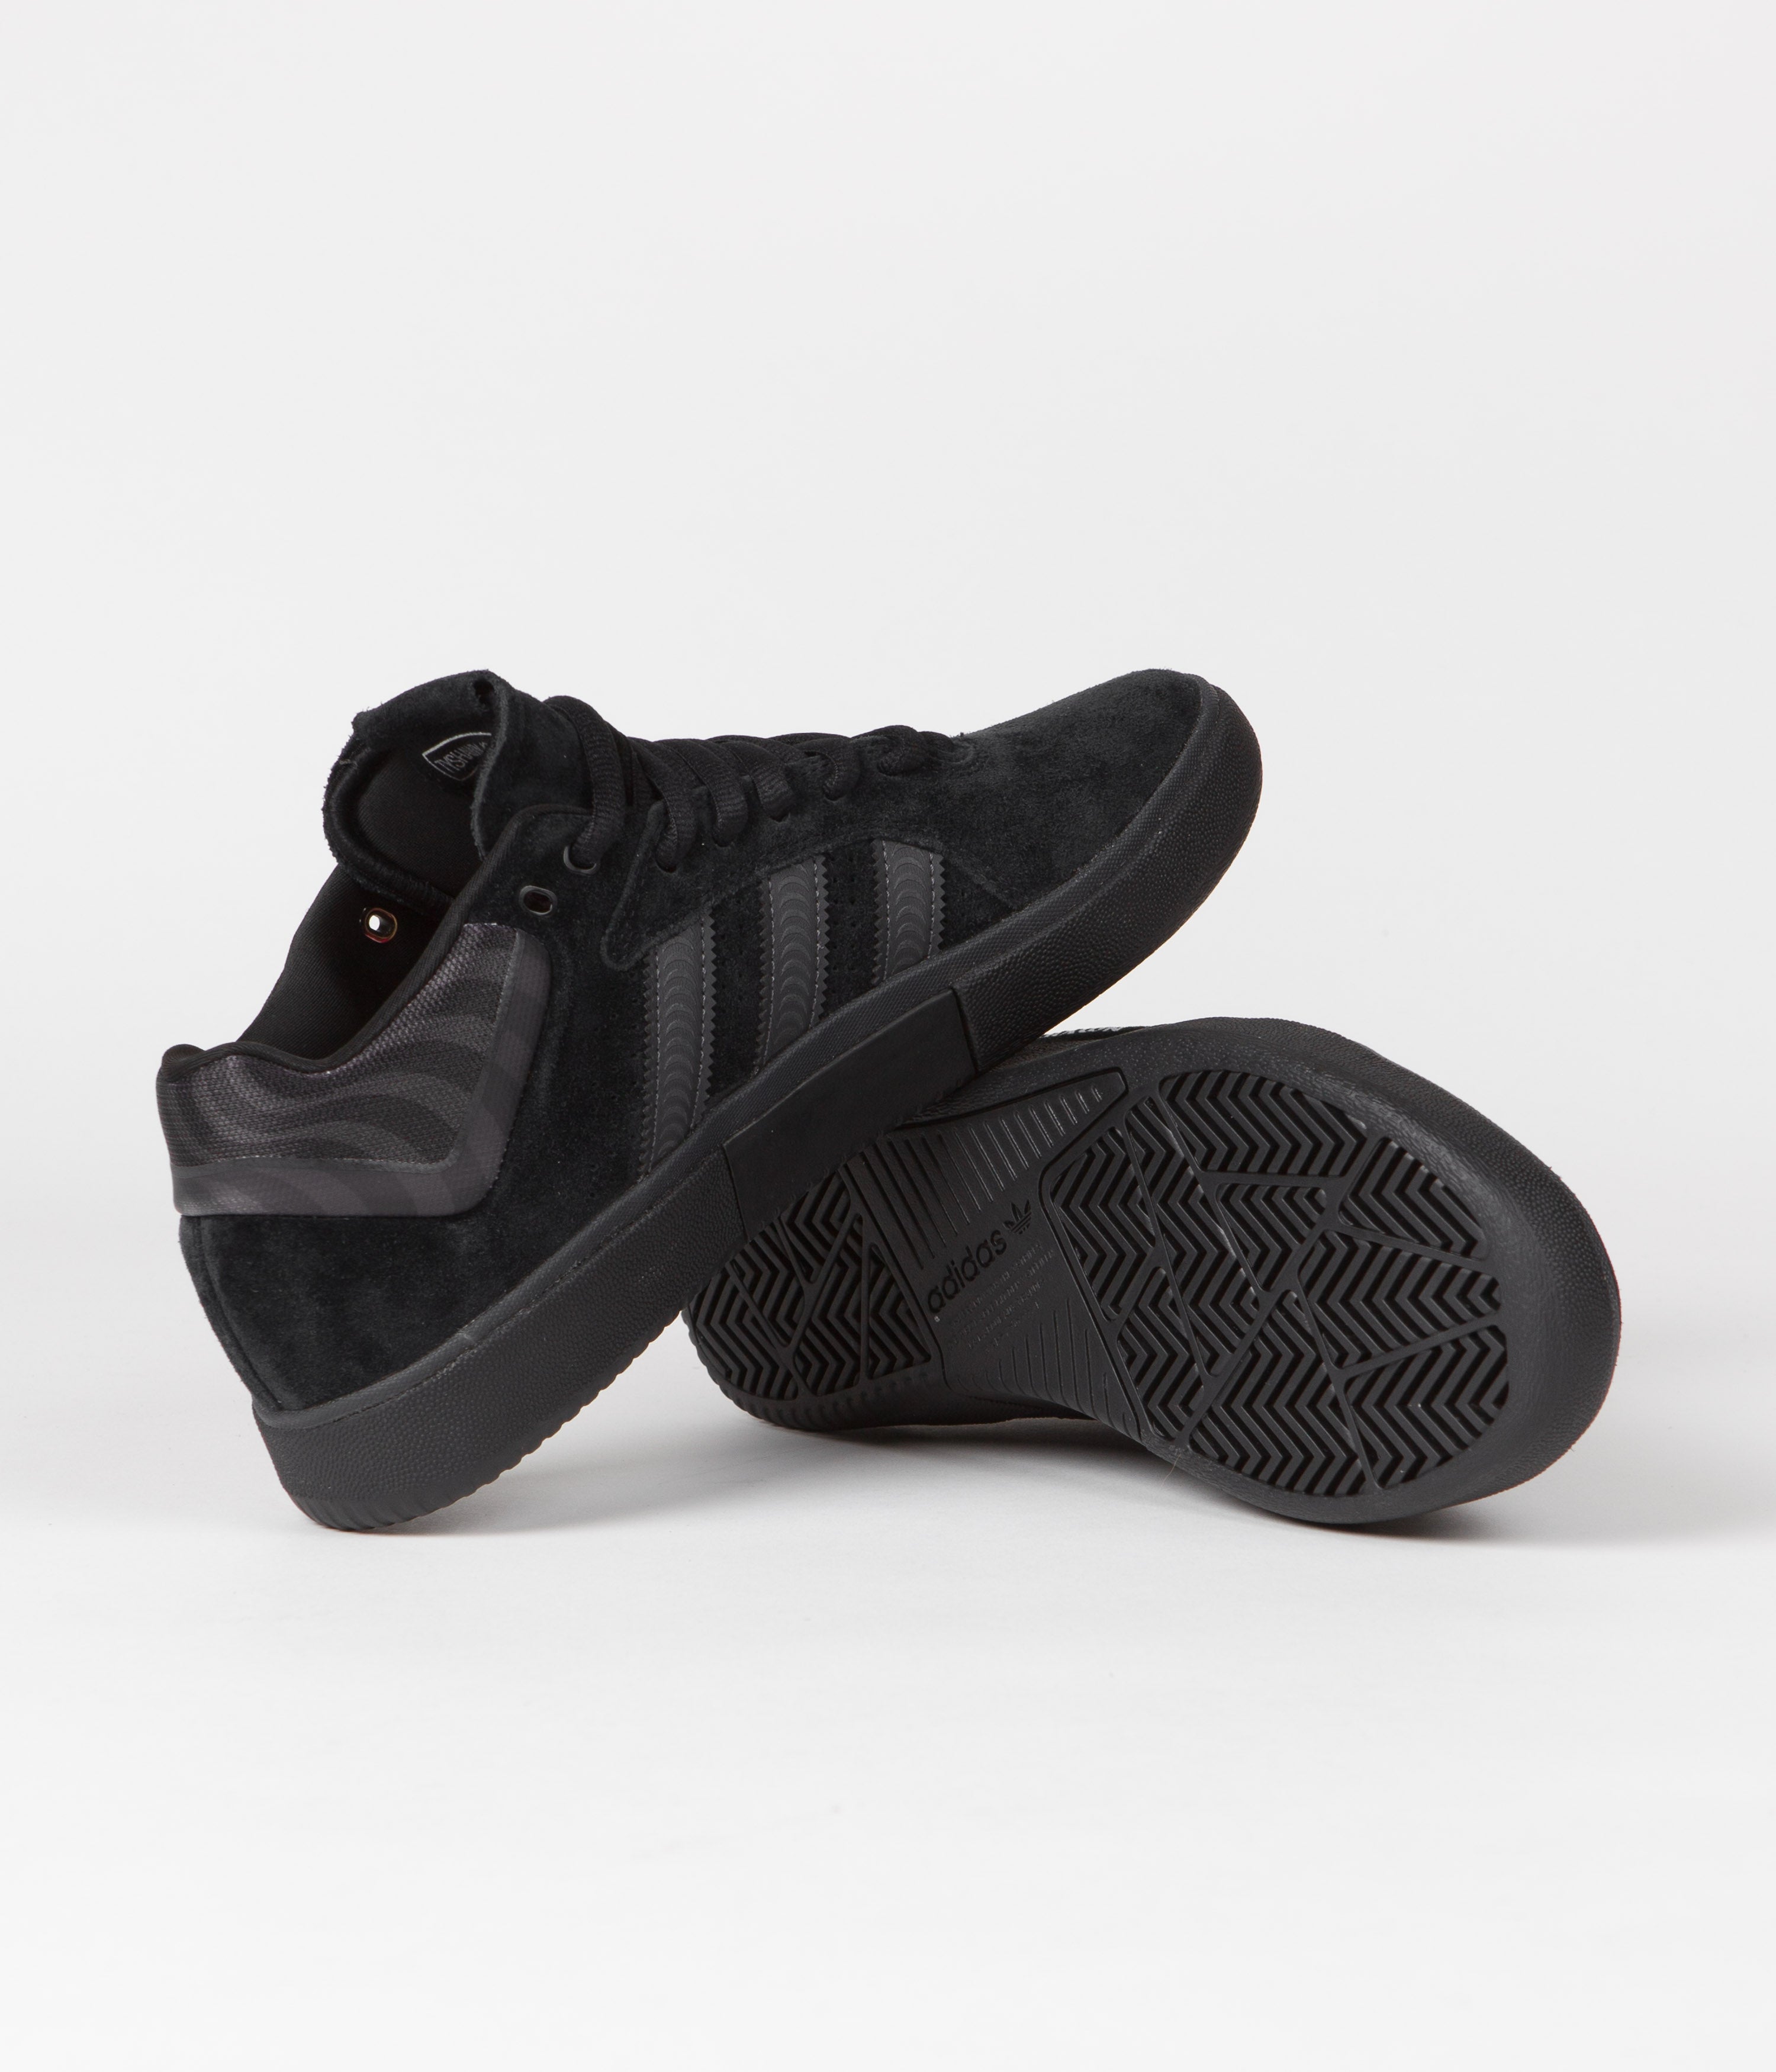 Adidas x Spitfire Tyshawn Shoes - Core Black / Grey Five / Silver Meta ...